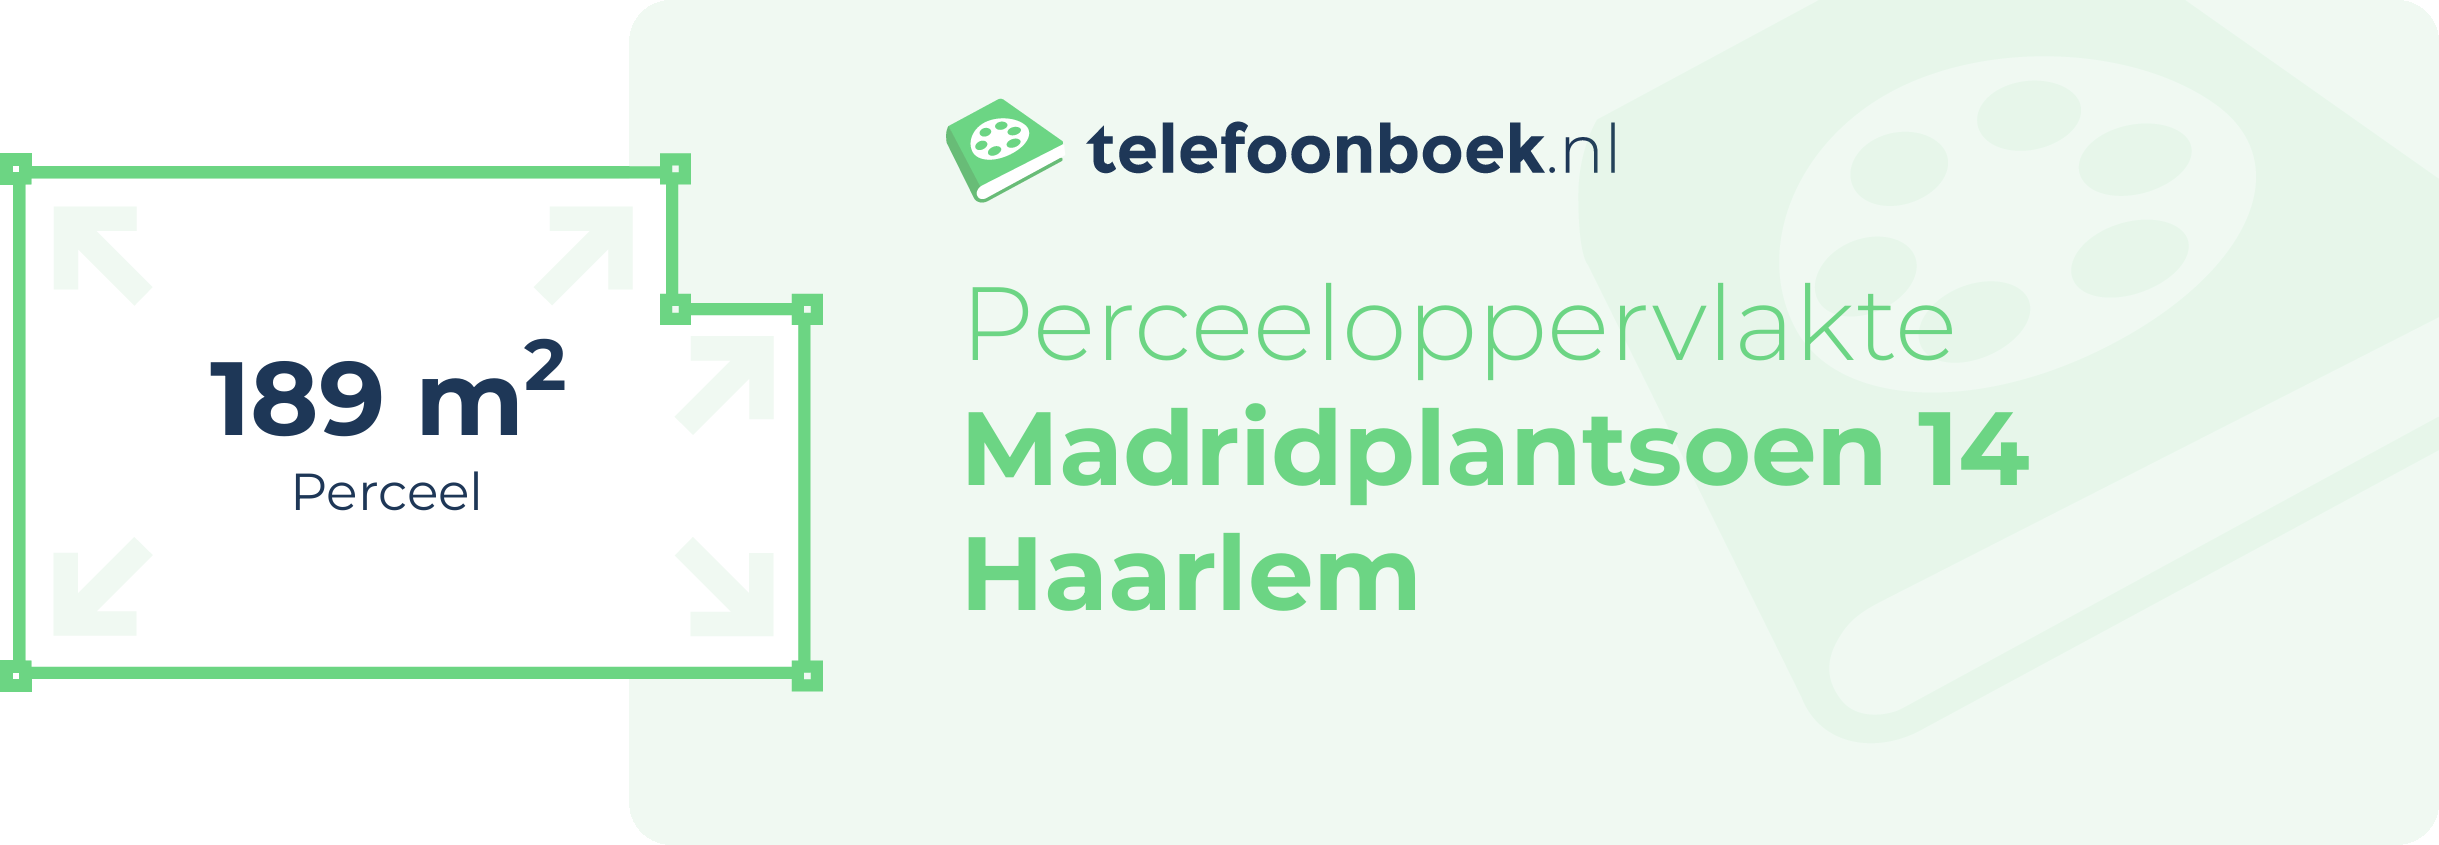 Perceeloppervlakte Madridplantsoen 14 Haarlem